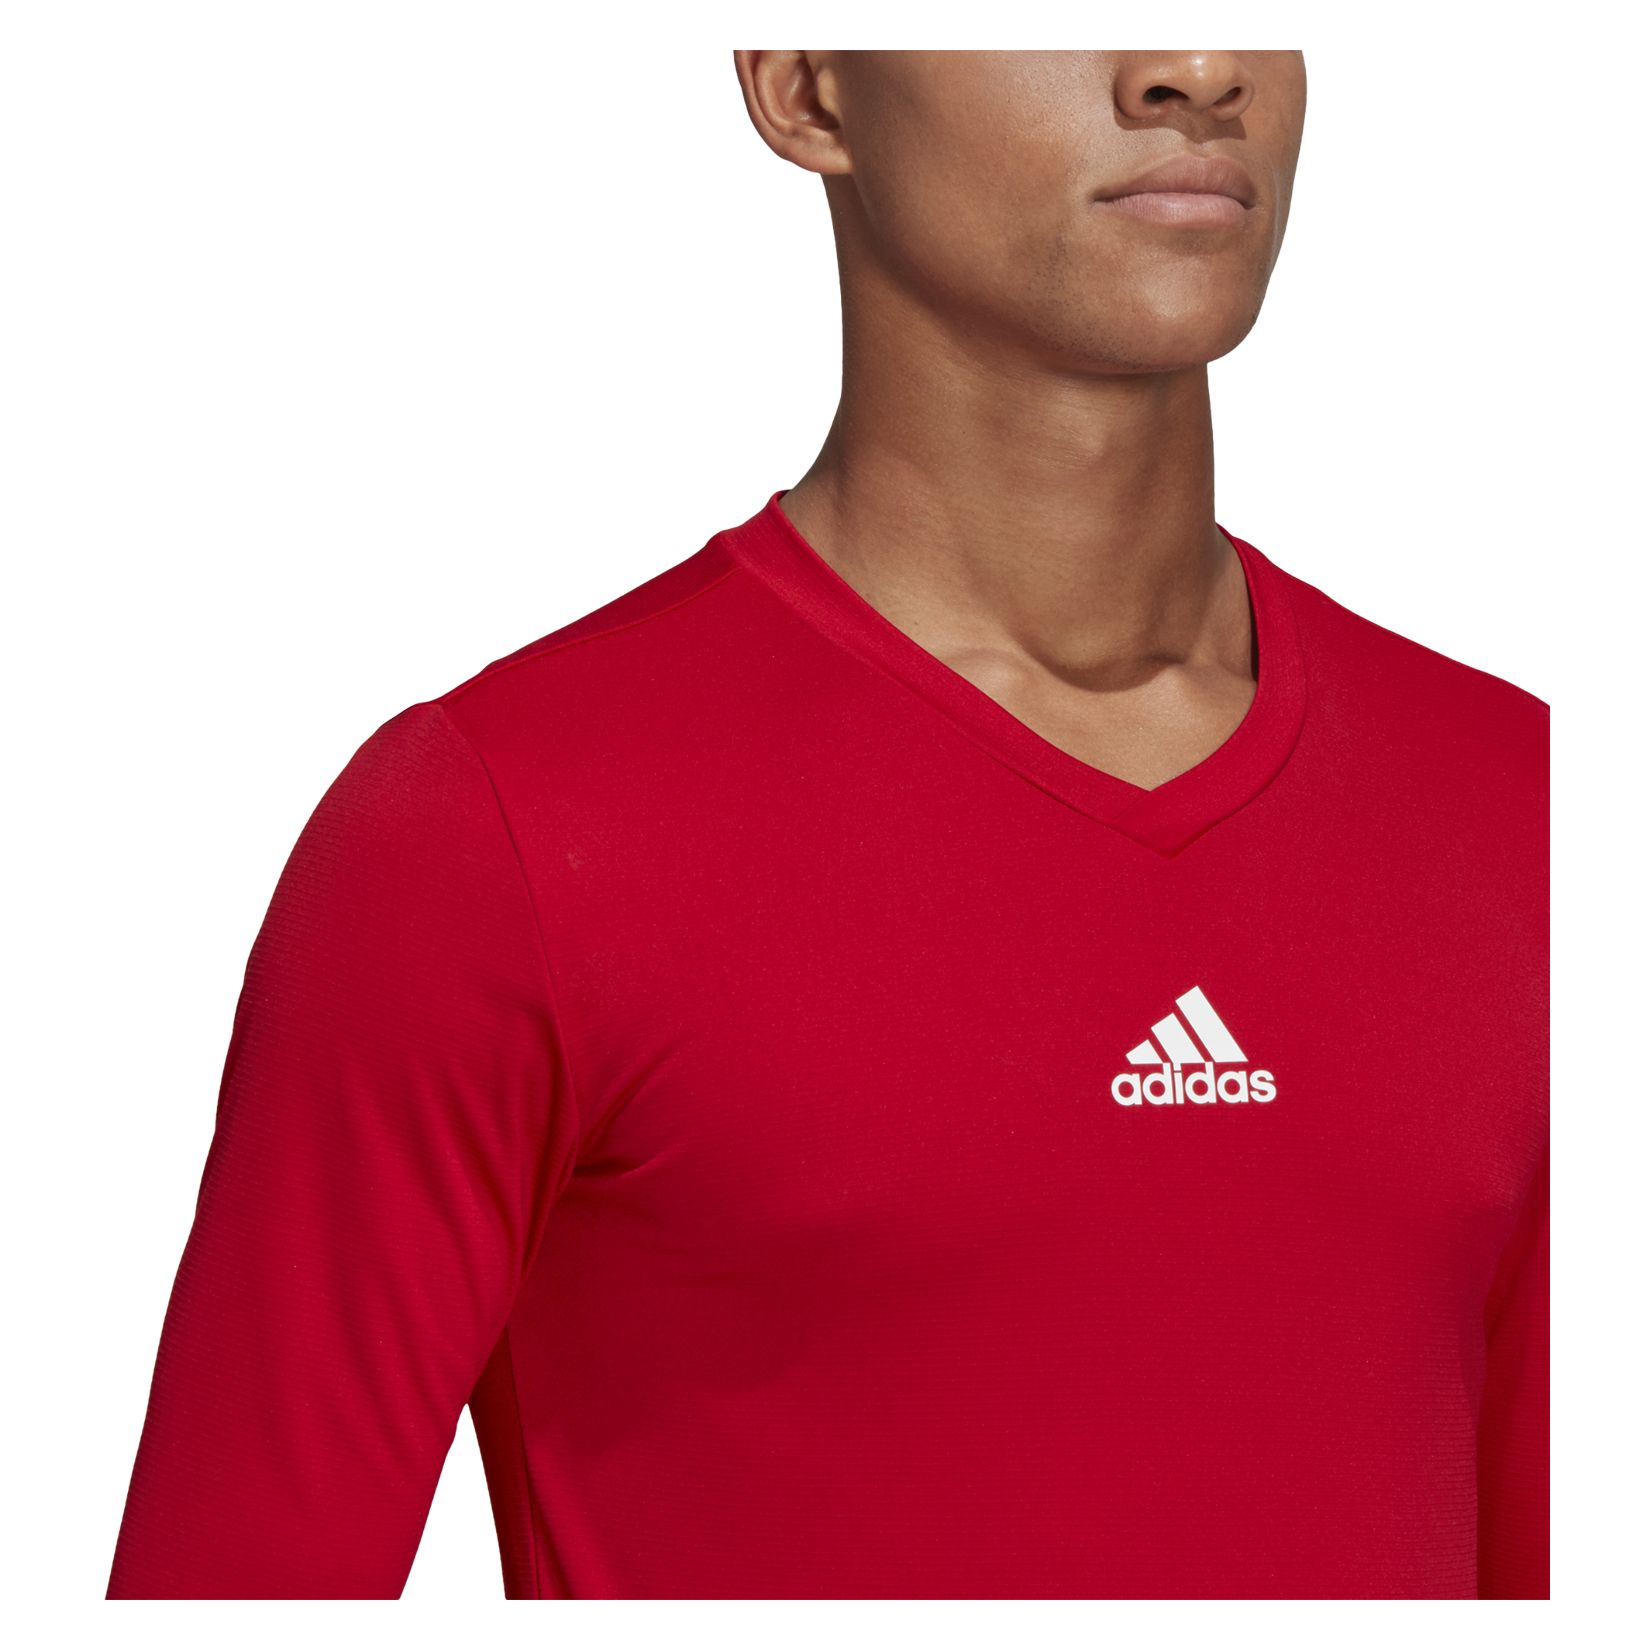 Adidas Long Sleeve Baselayer Tee Team Power Red